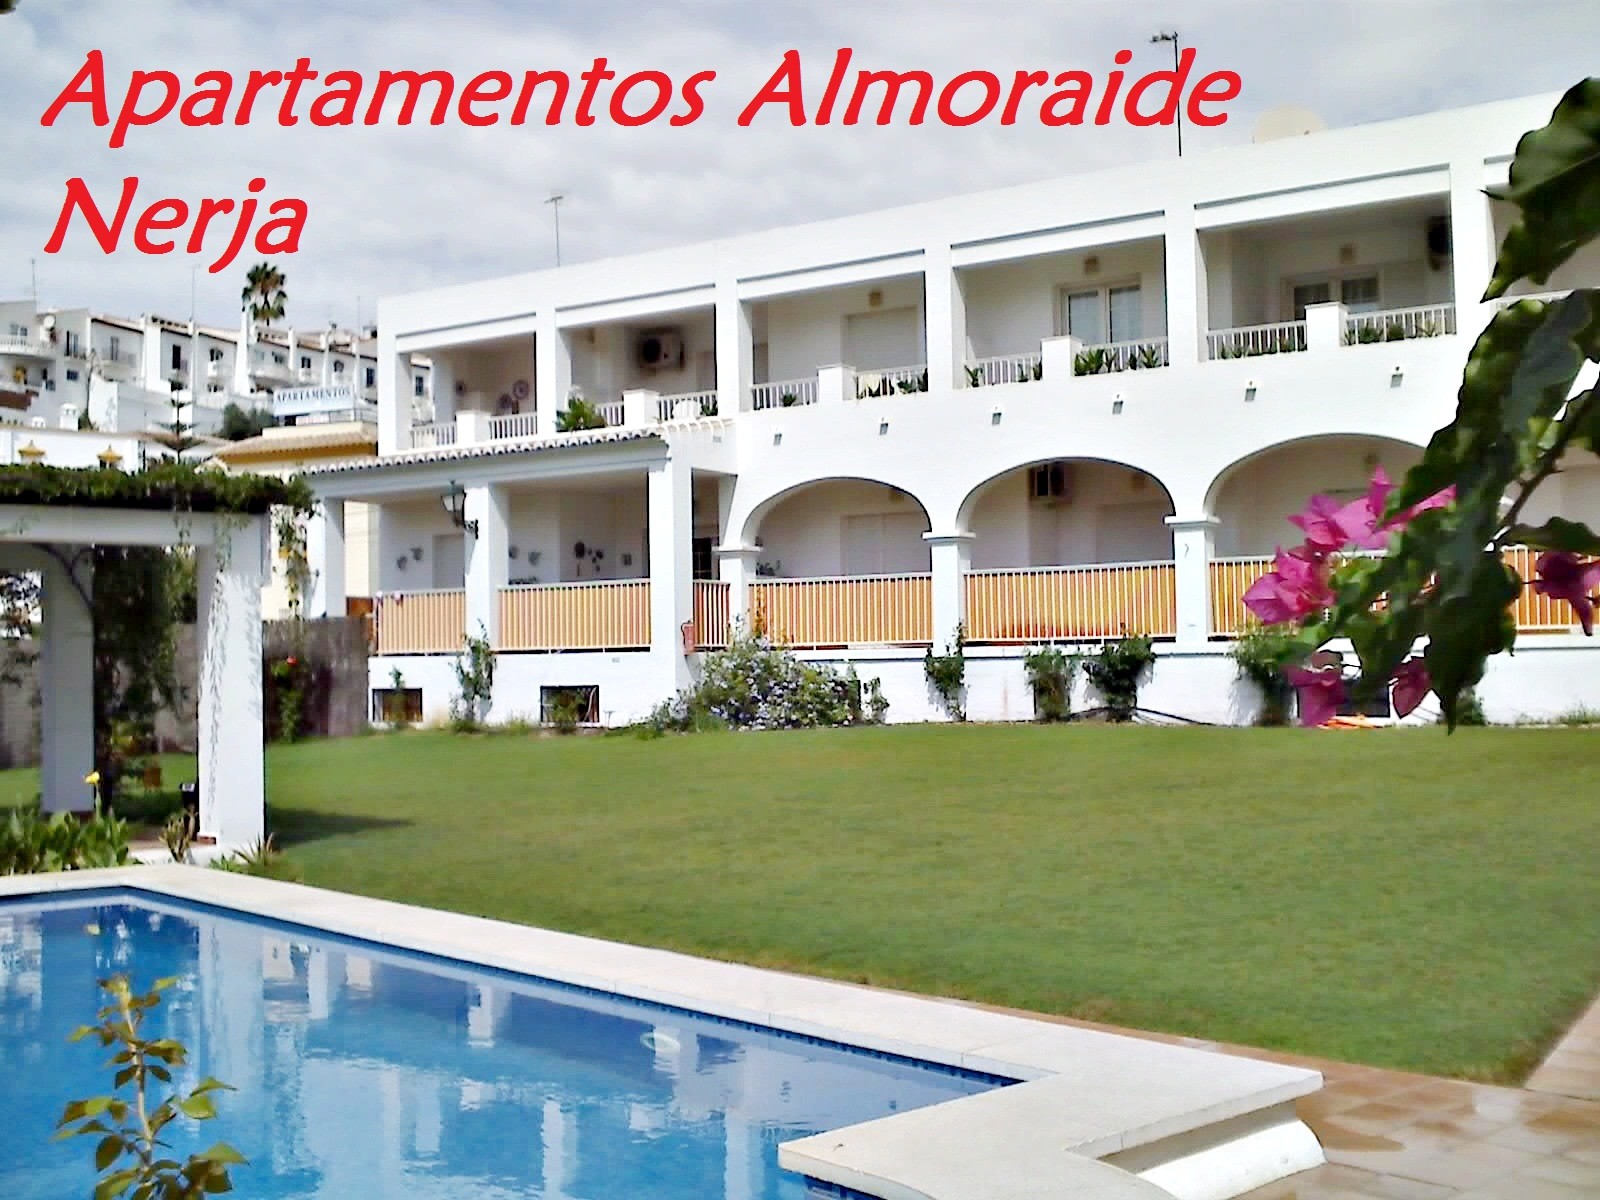 Almoraide Apartments